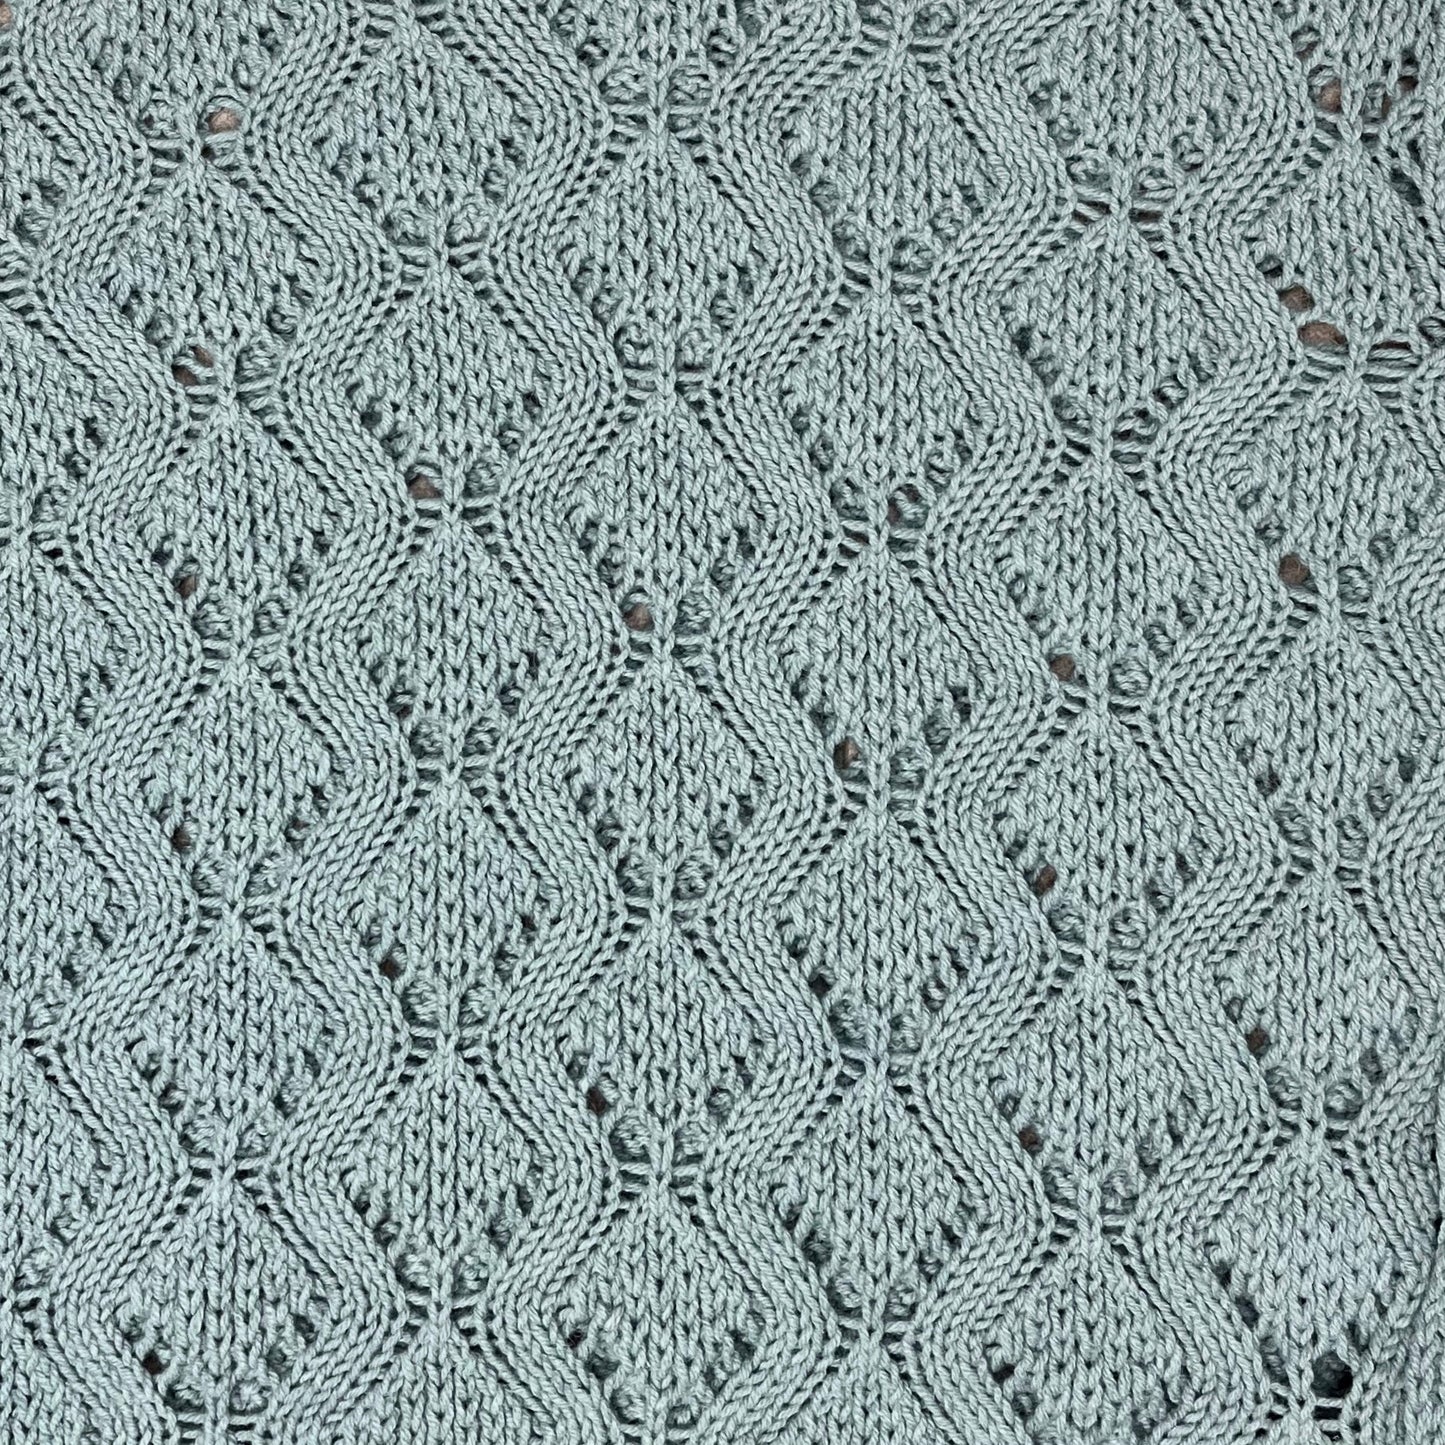 Raf Simons Alpaca Blend Knit Sweater - SS20